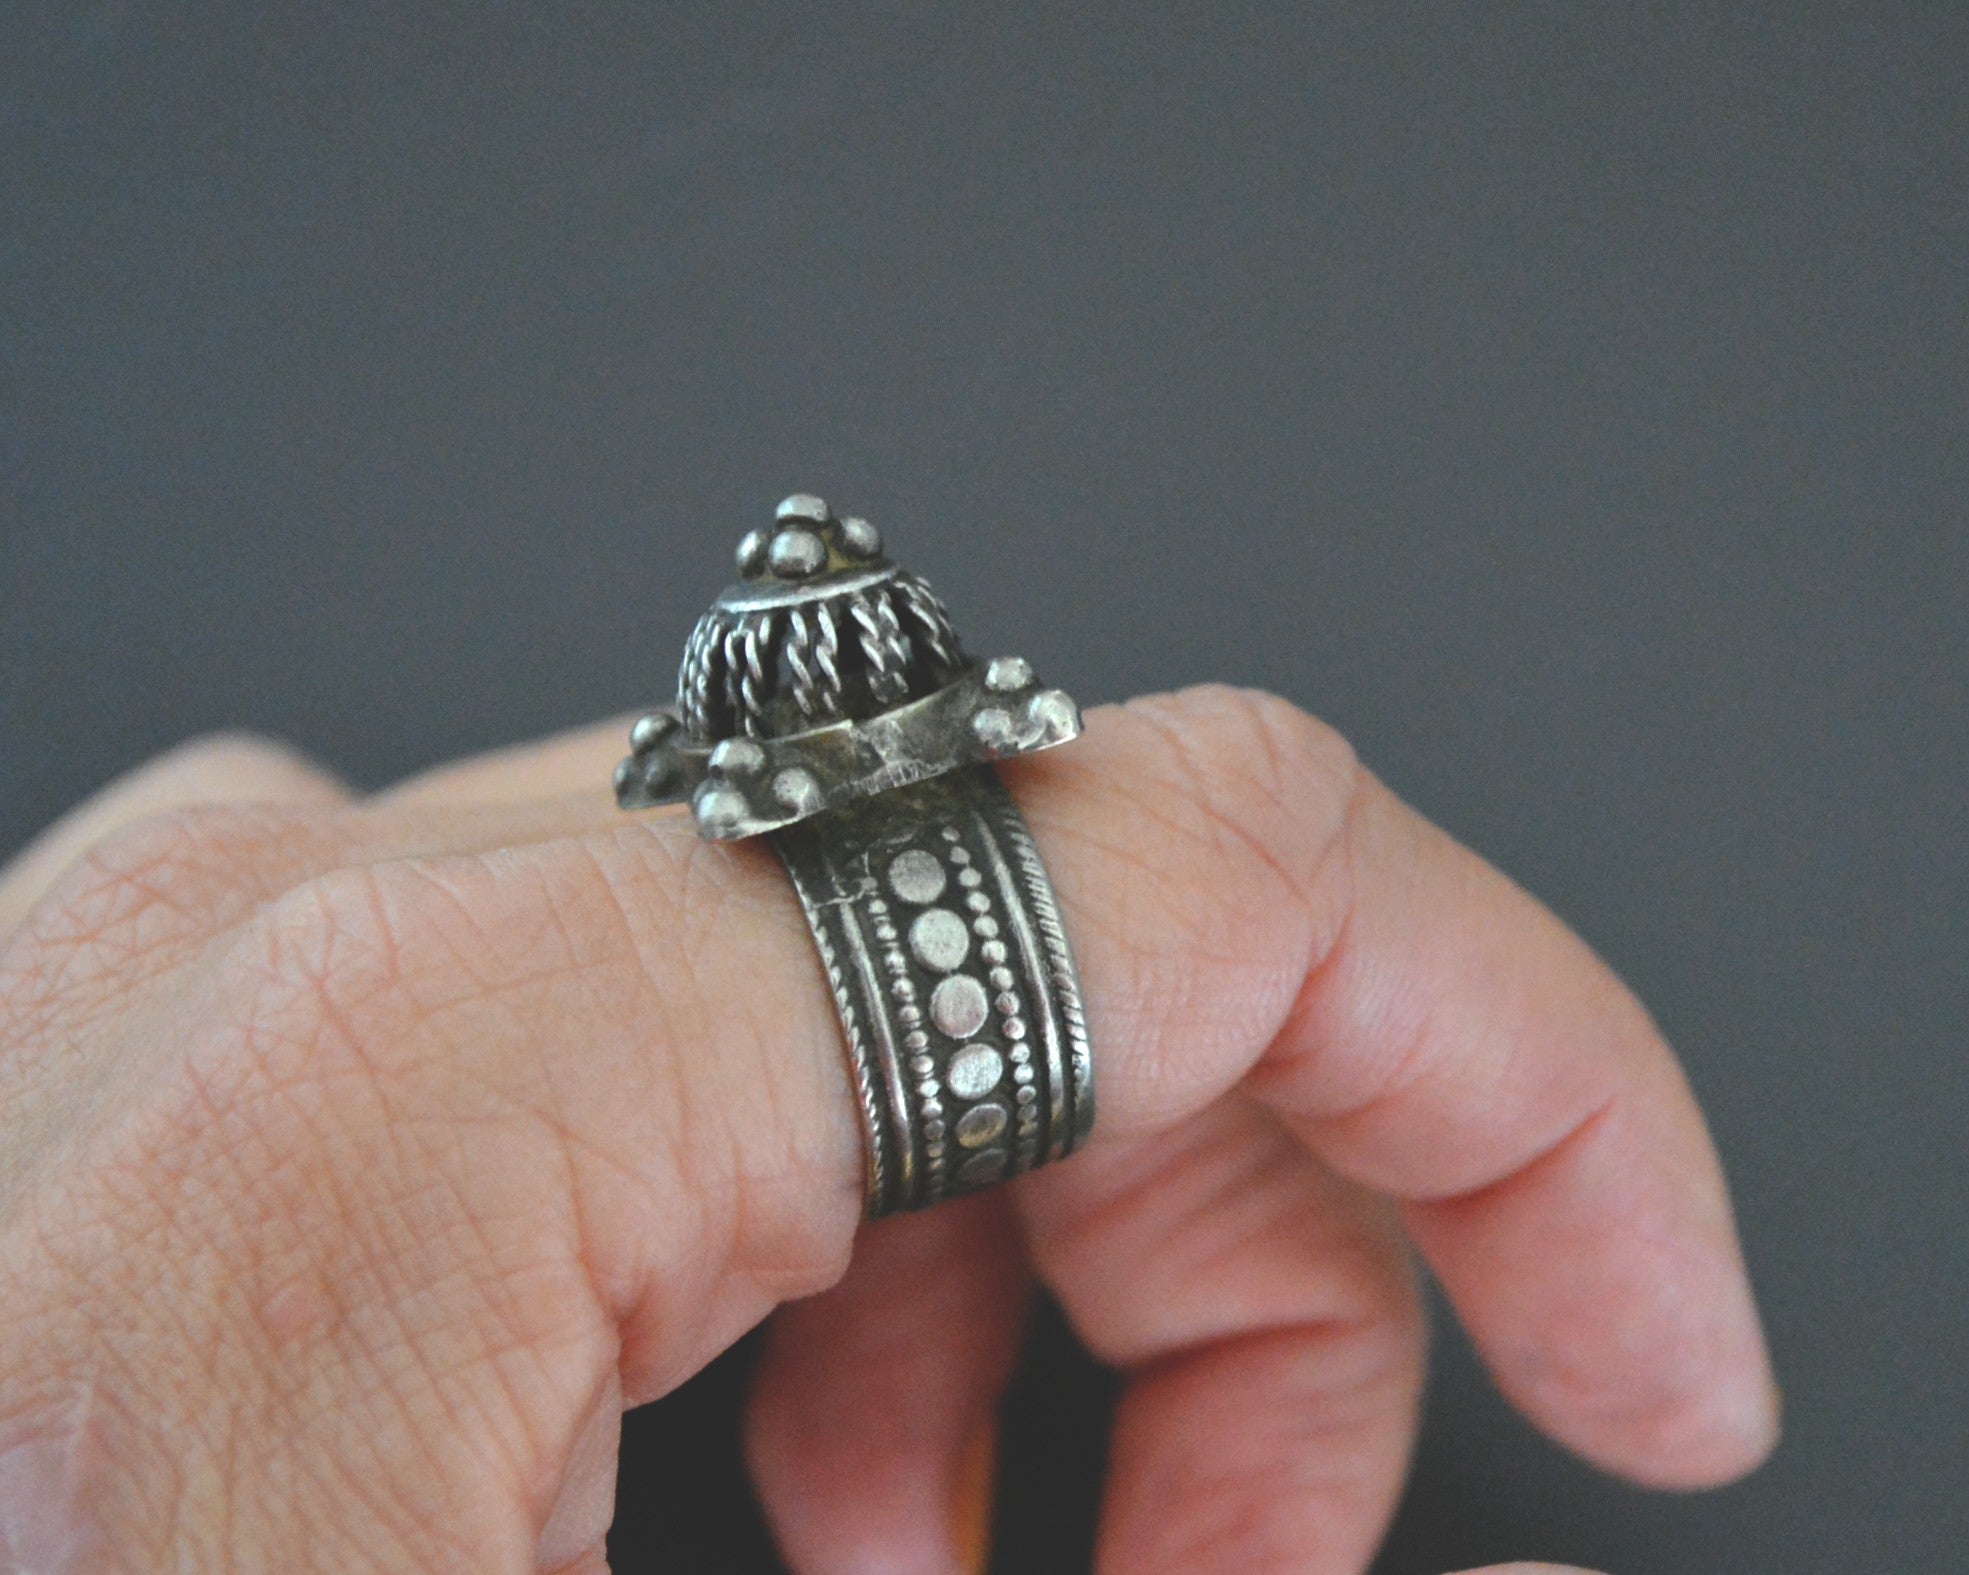 Antique Omani Silver Ring - Size 8